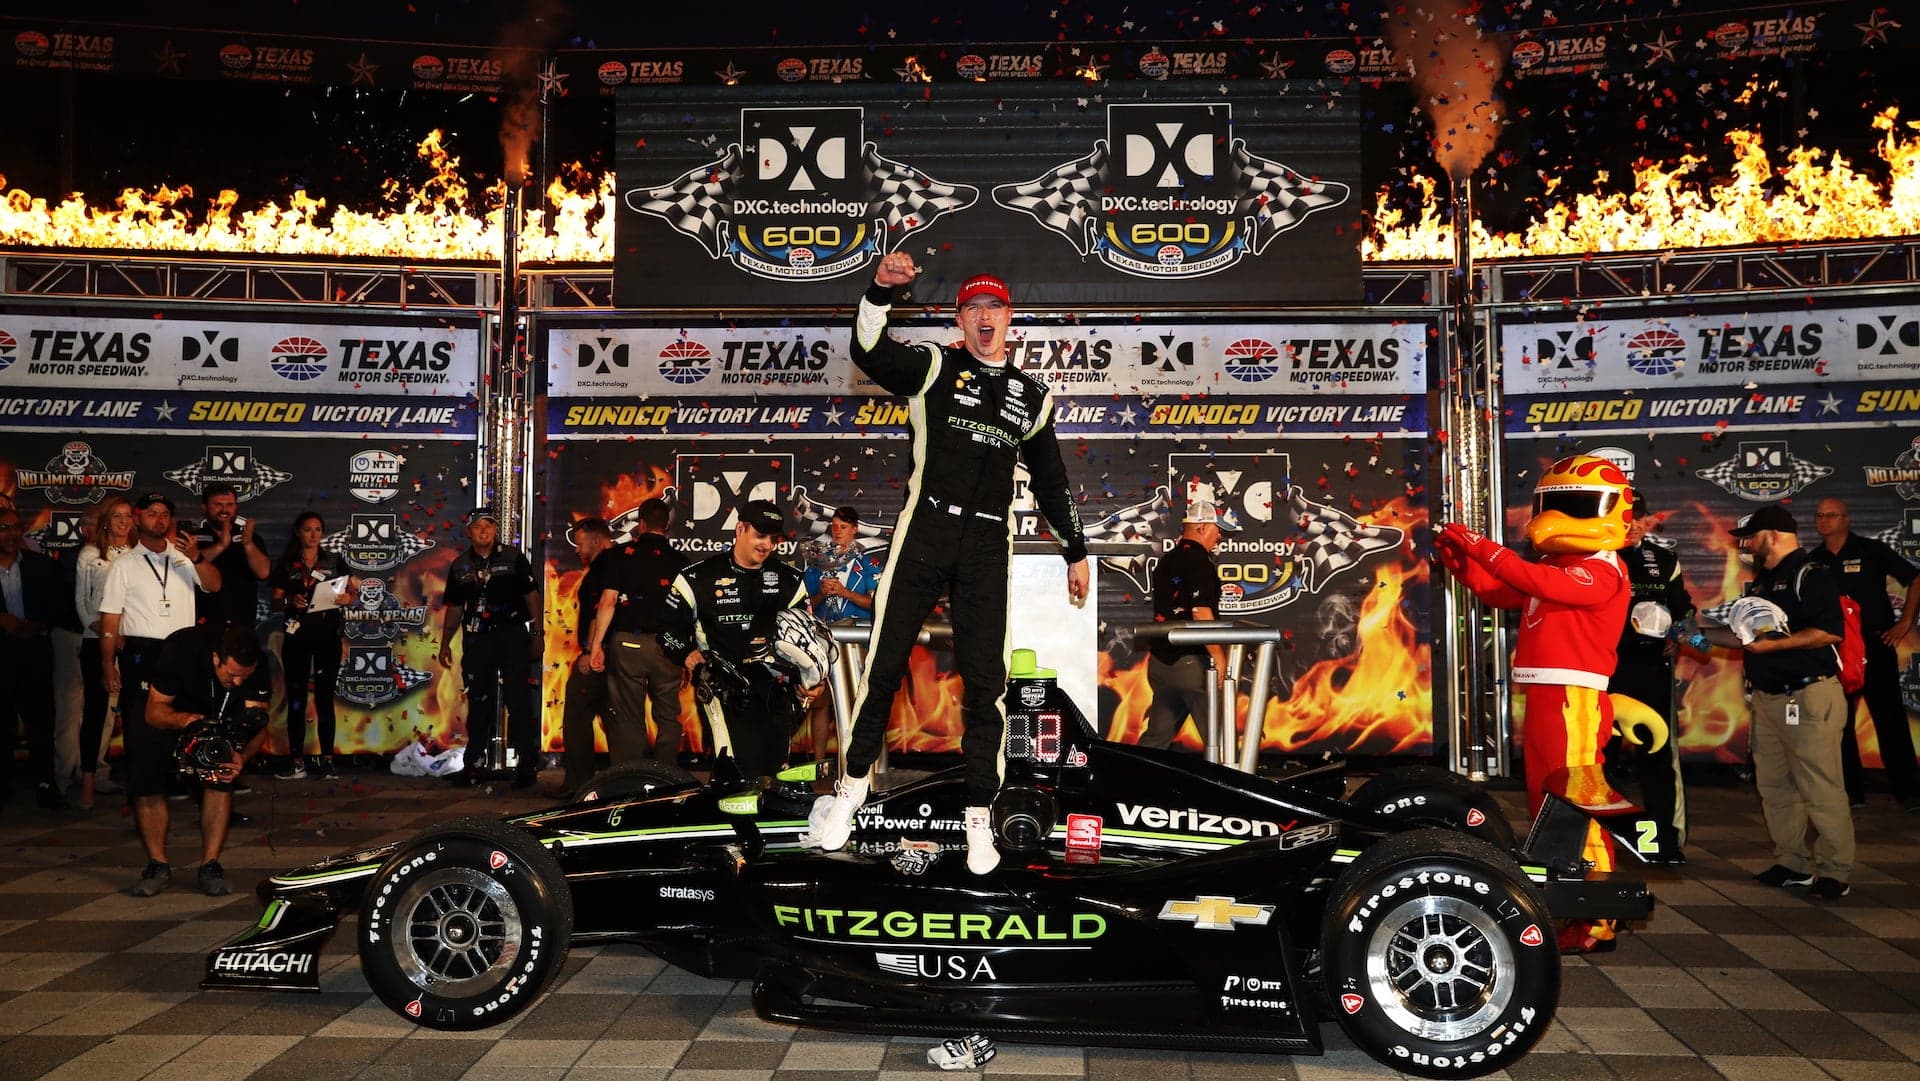 IndyCar: Team Penske and Josef Newgarden Take Strategic Win at Texas Motor Speedway